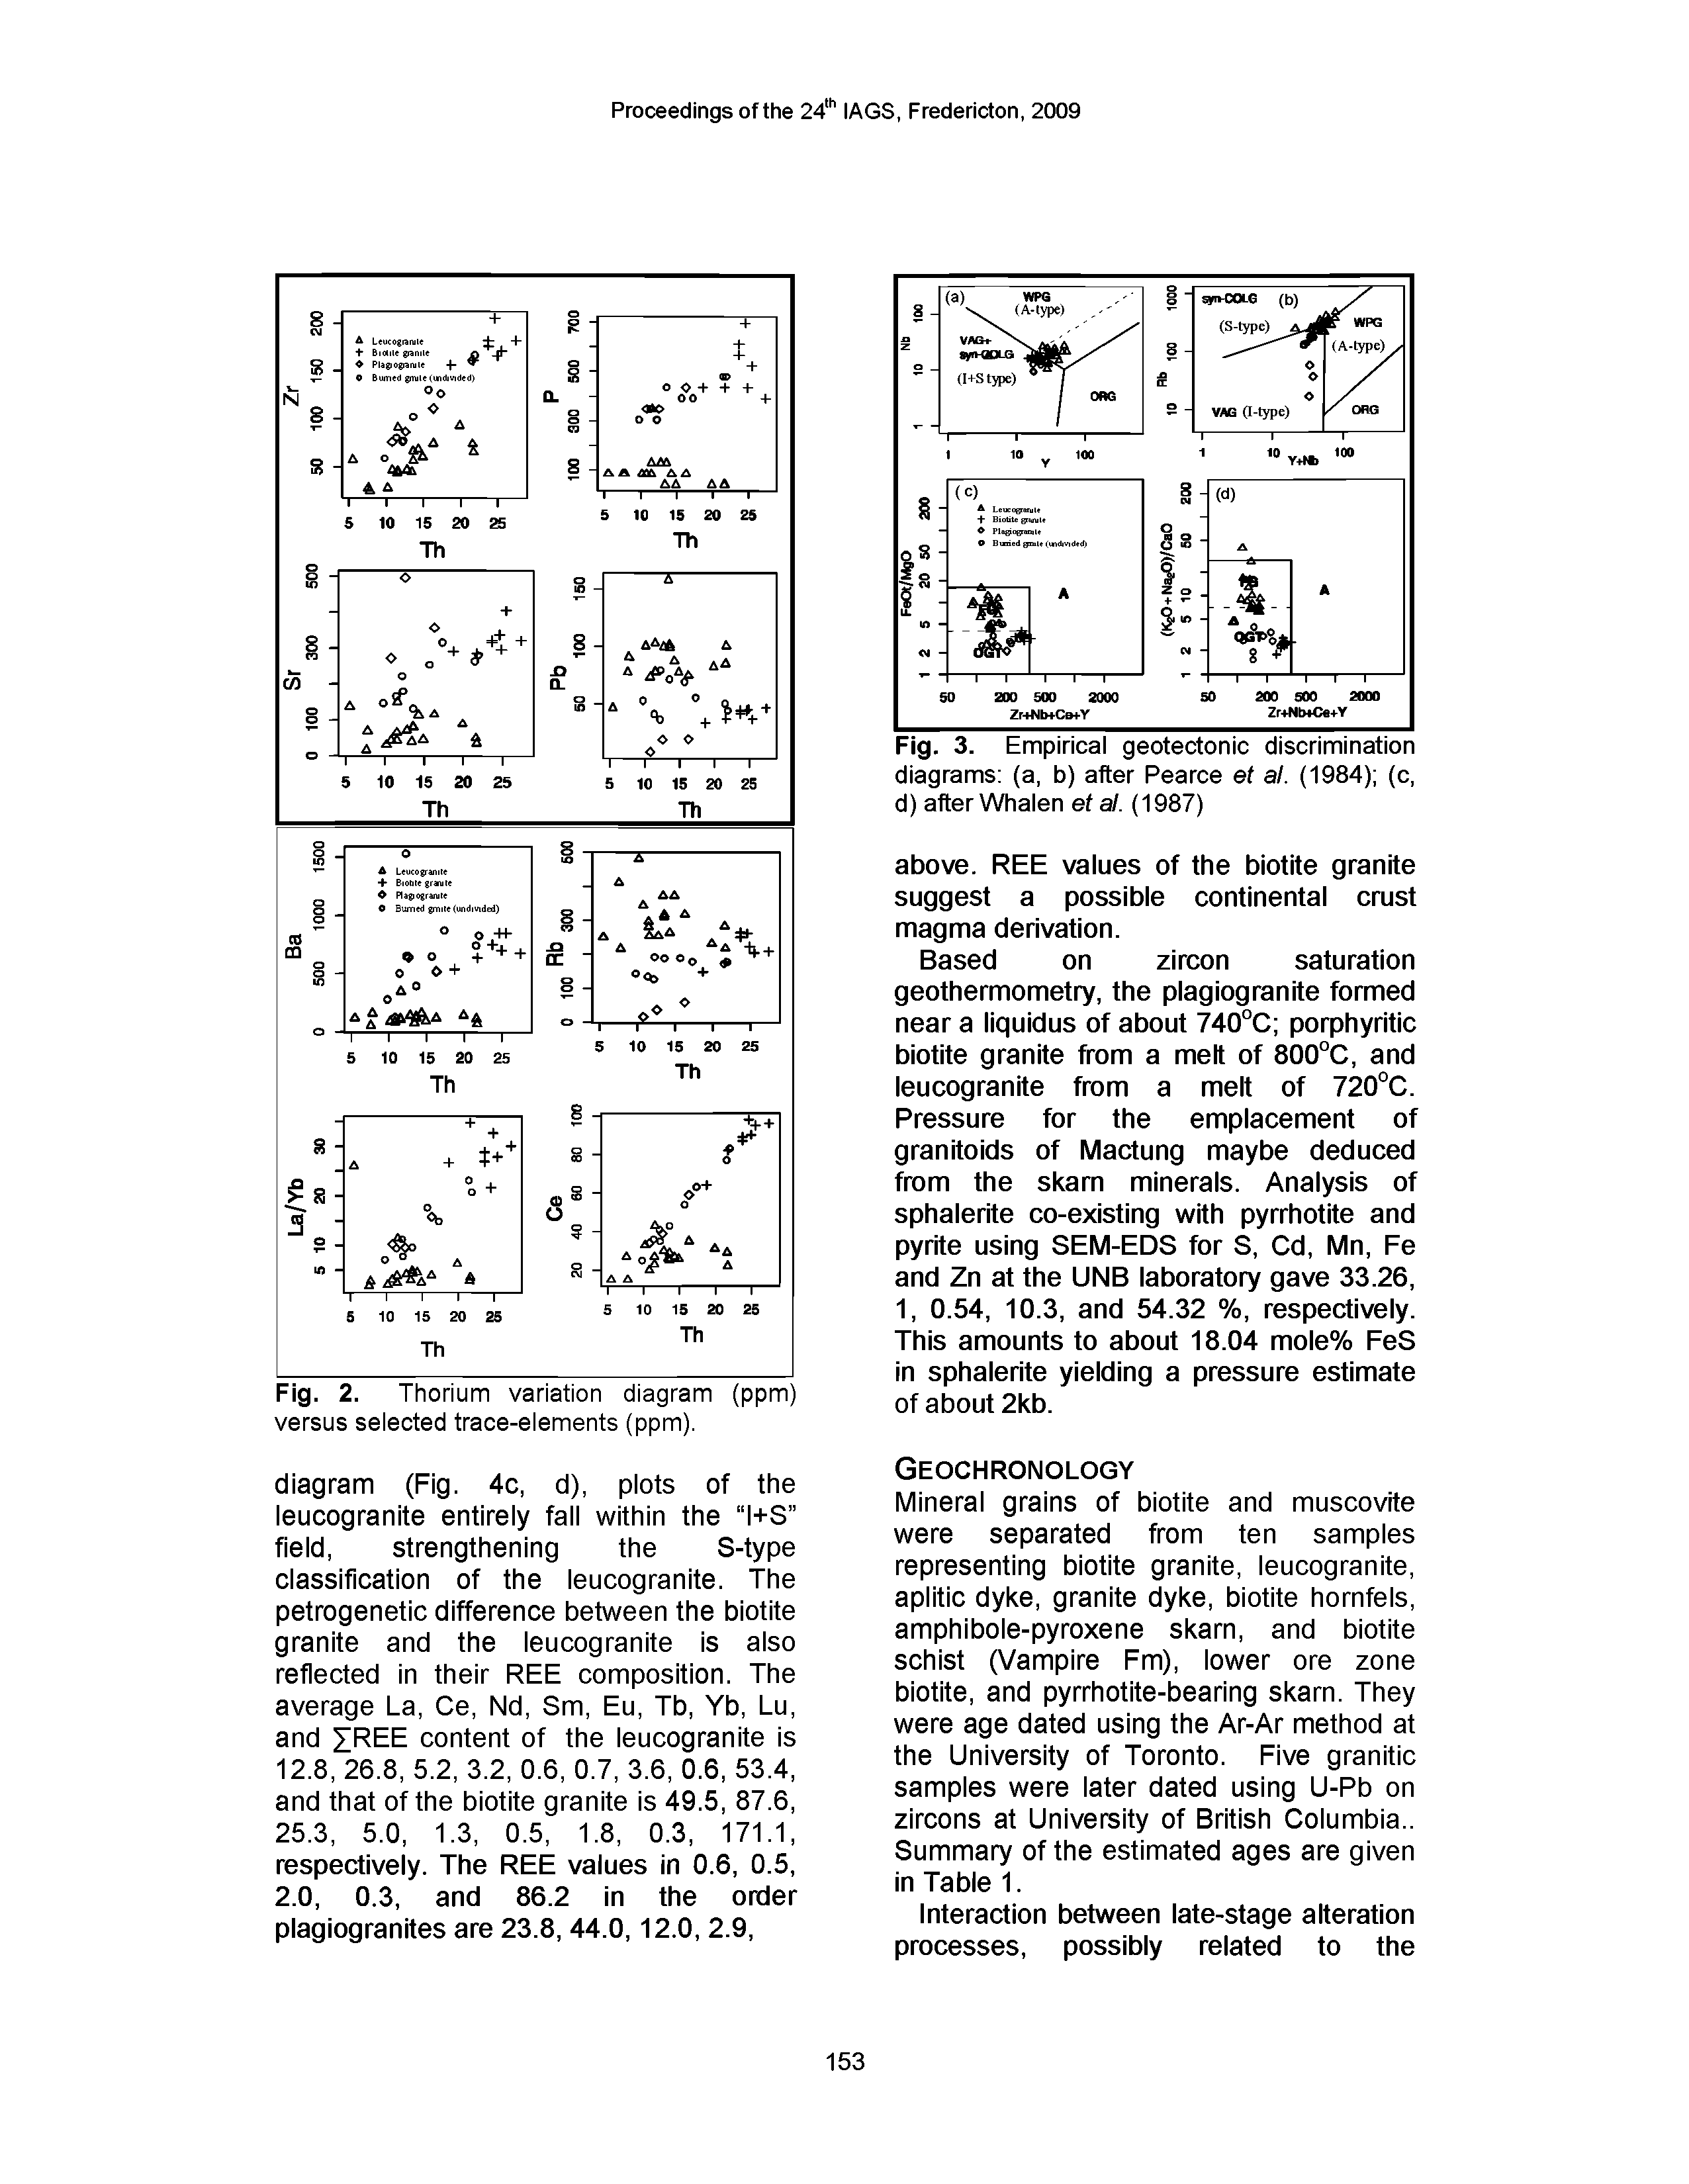 Fig. 2. Thorium variation diagram (ppm) versus seleoted traoe-elements (ppm).